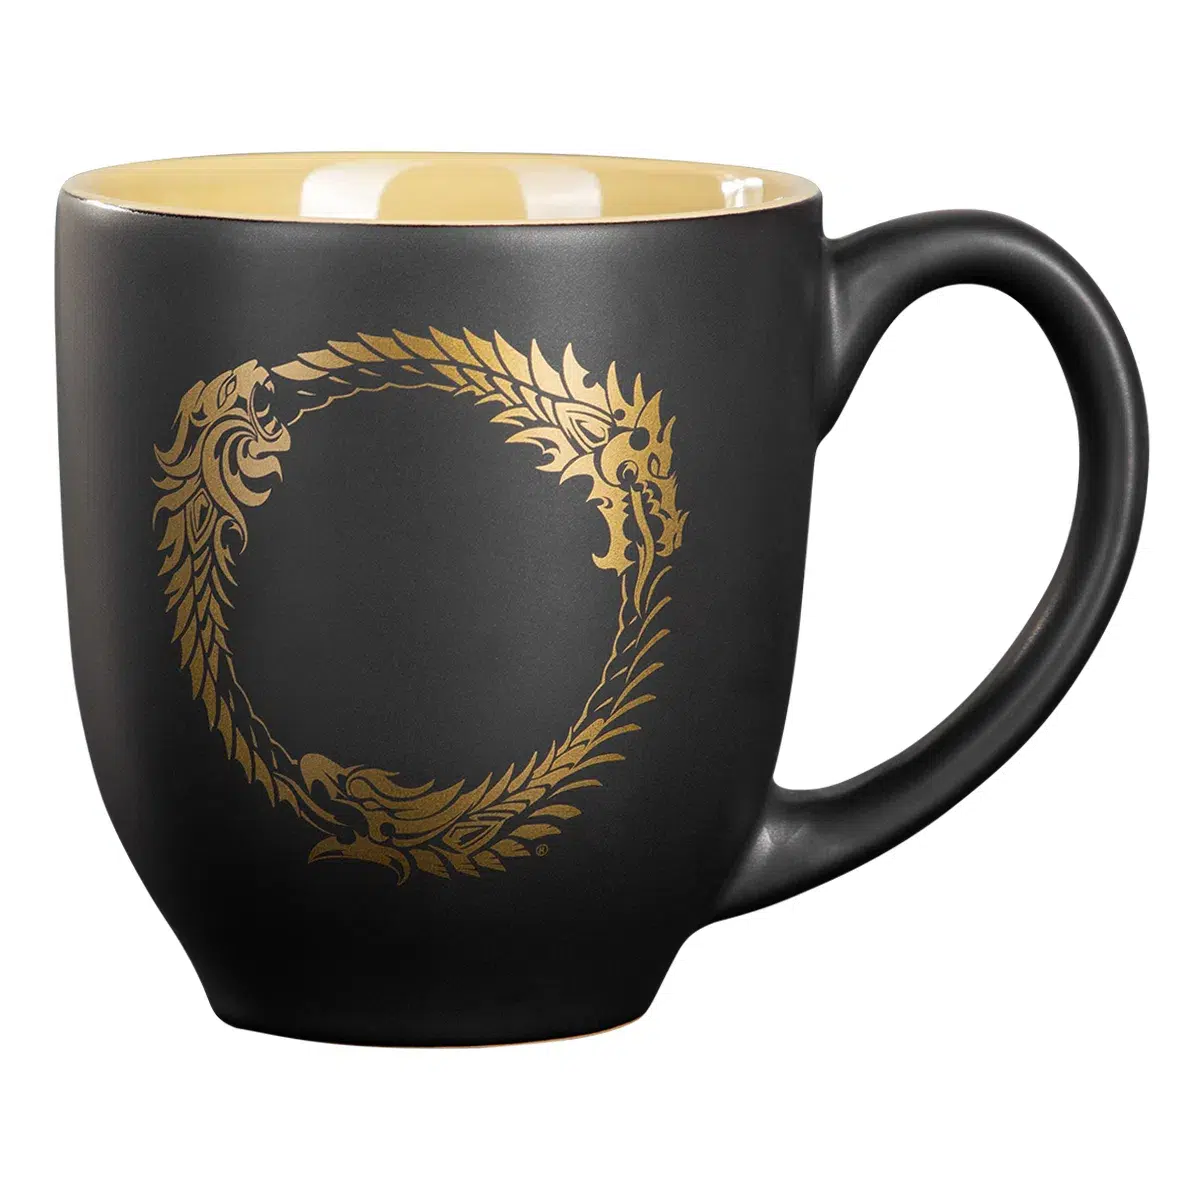 TESO Two-Colored Mug "Ouroboros"